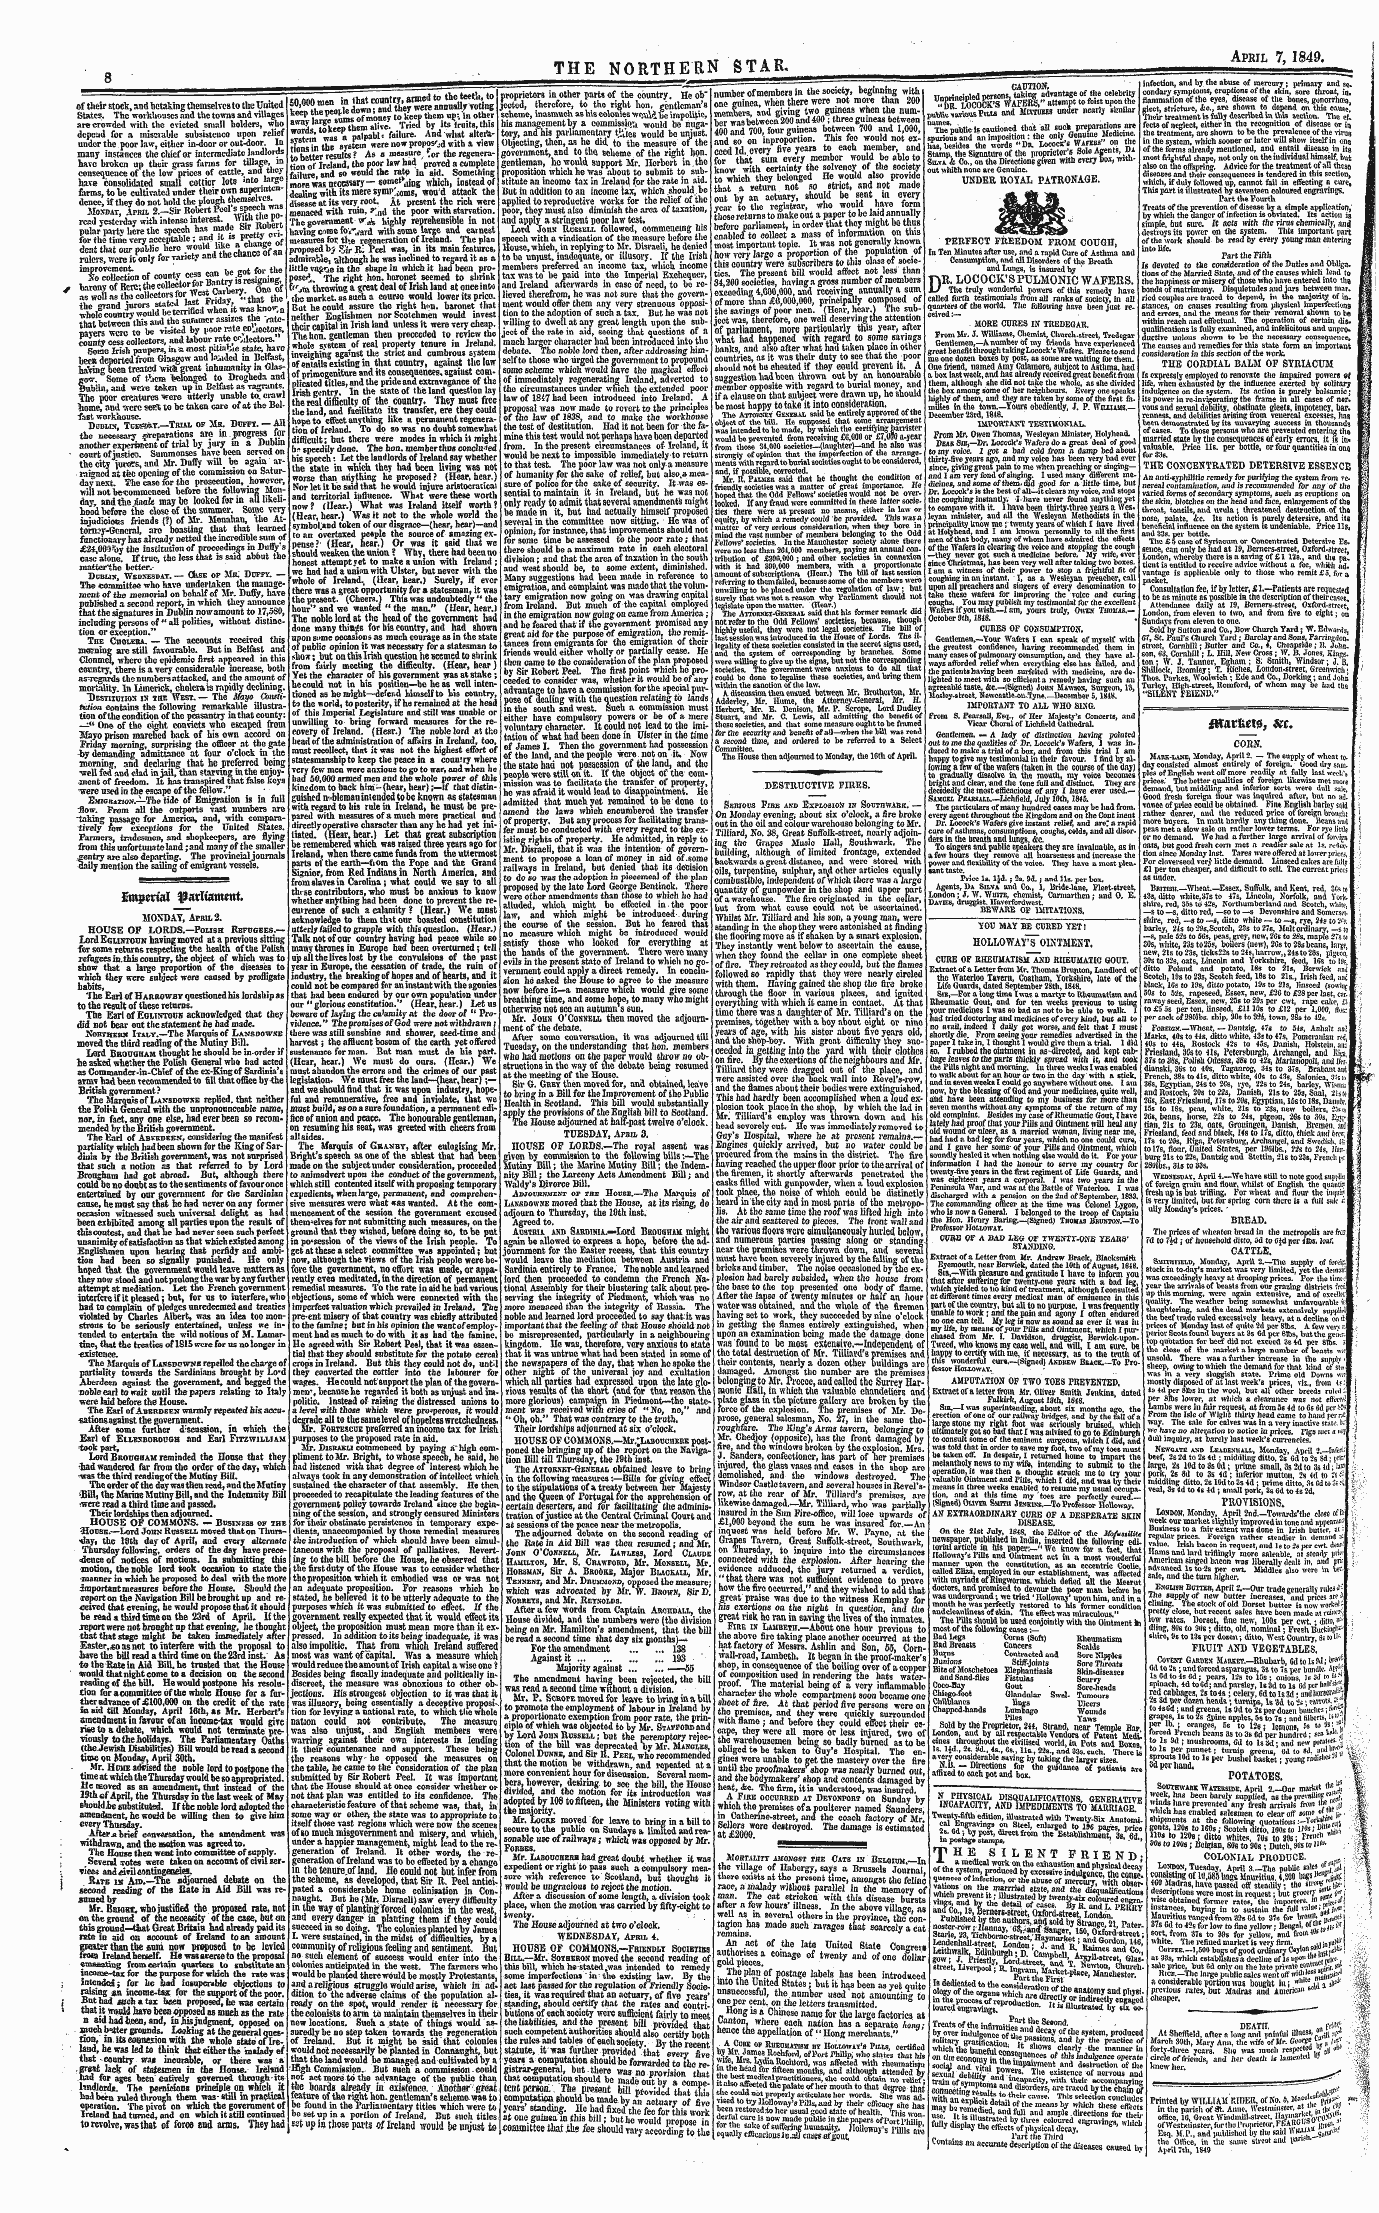 Northern Star (1837-1852): jS F Y, 3rd edition - Ad00811